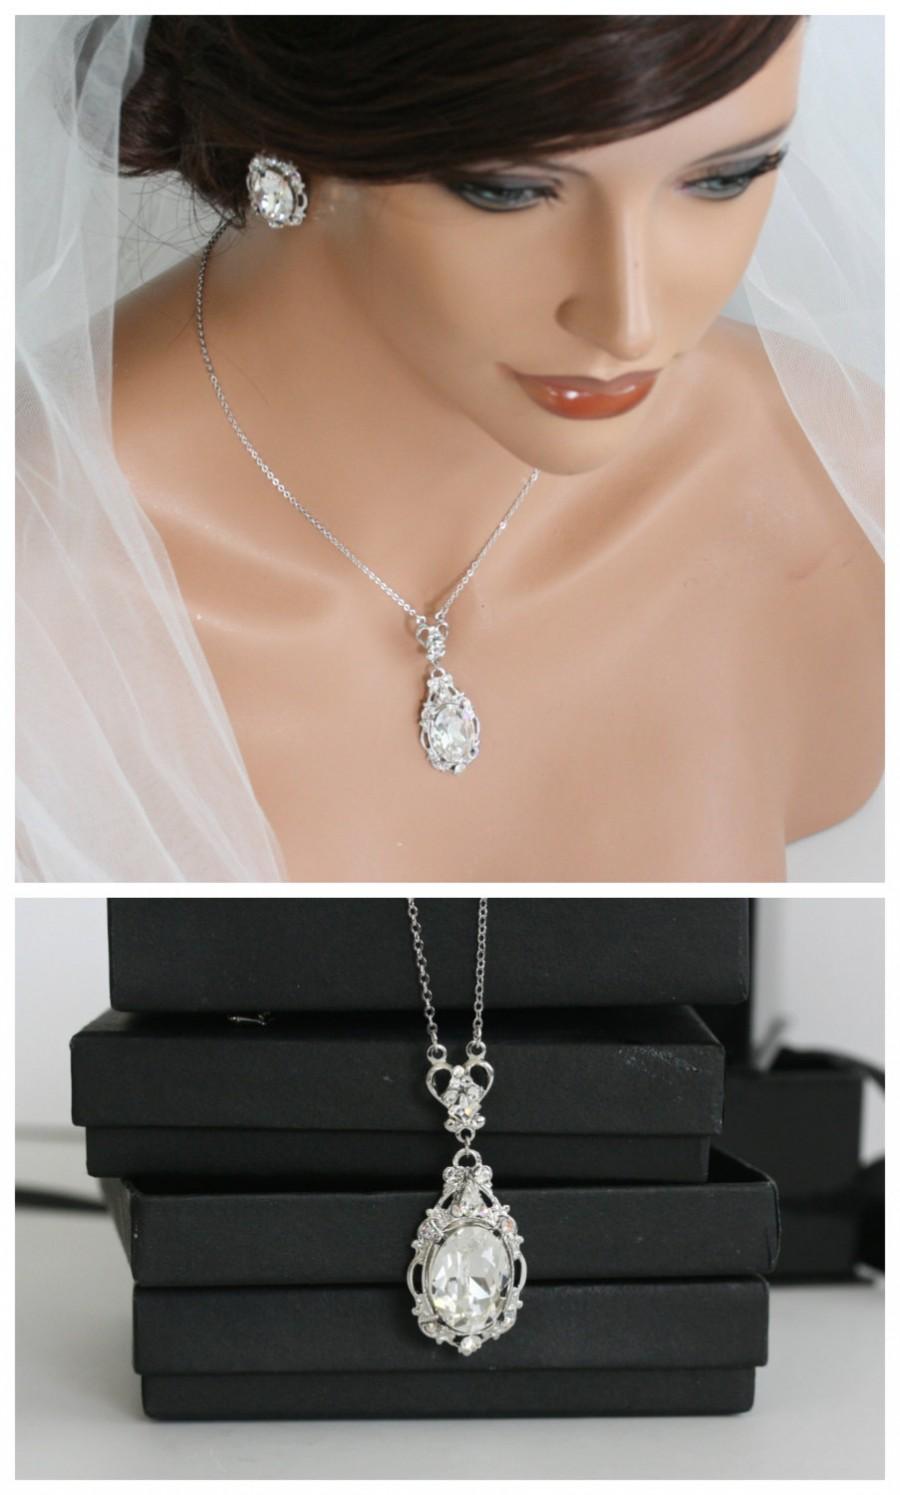 Mariage - Pendant Bridal Necklace Swarovski Crystal Simple Wedding Necklace Vintage necklace Rhinestone Wedding jewelry RYAN PENDANT